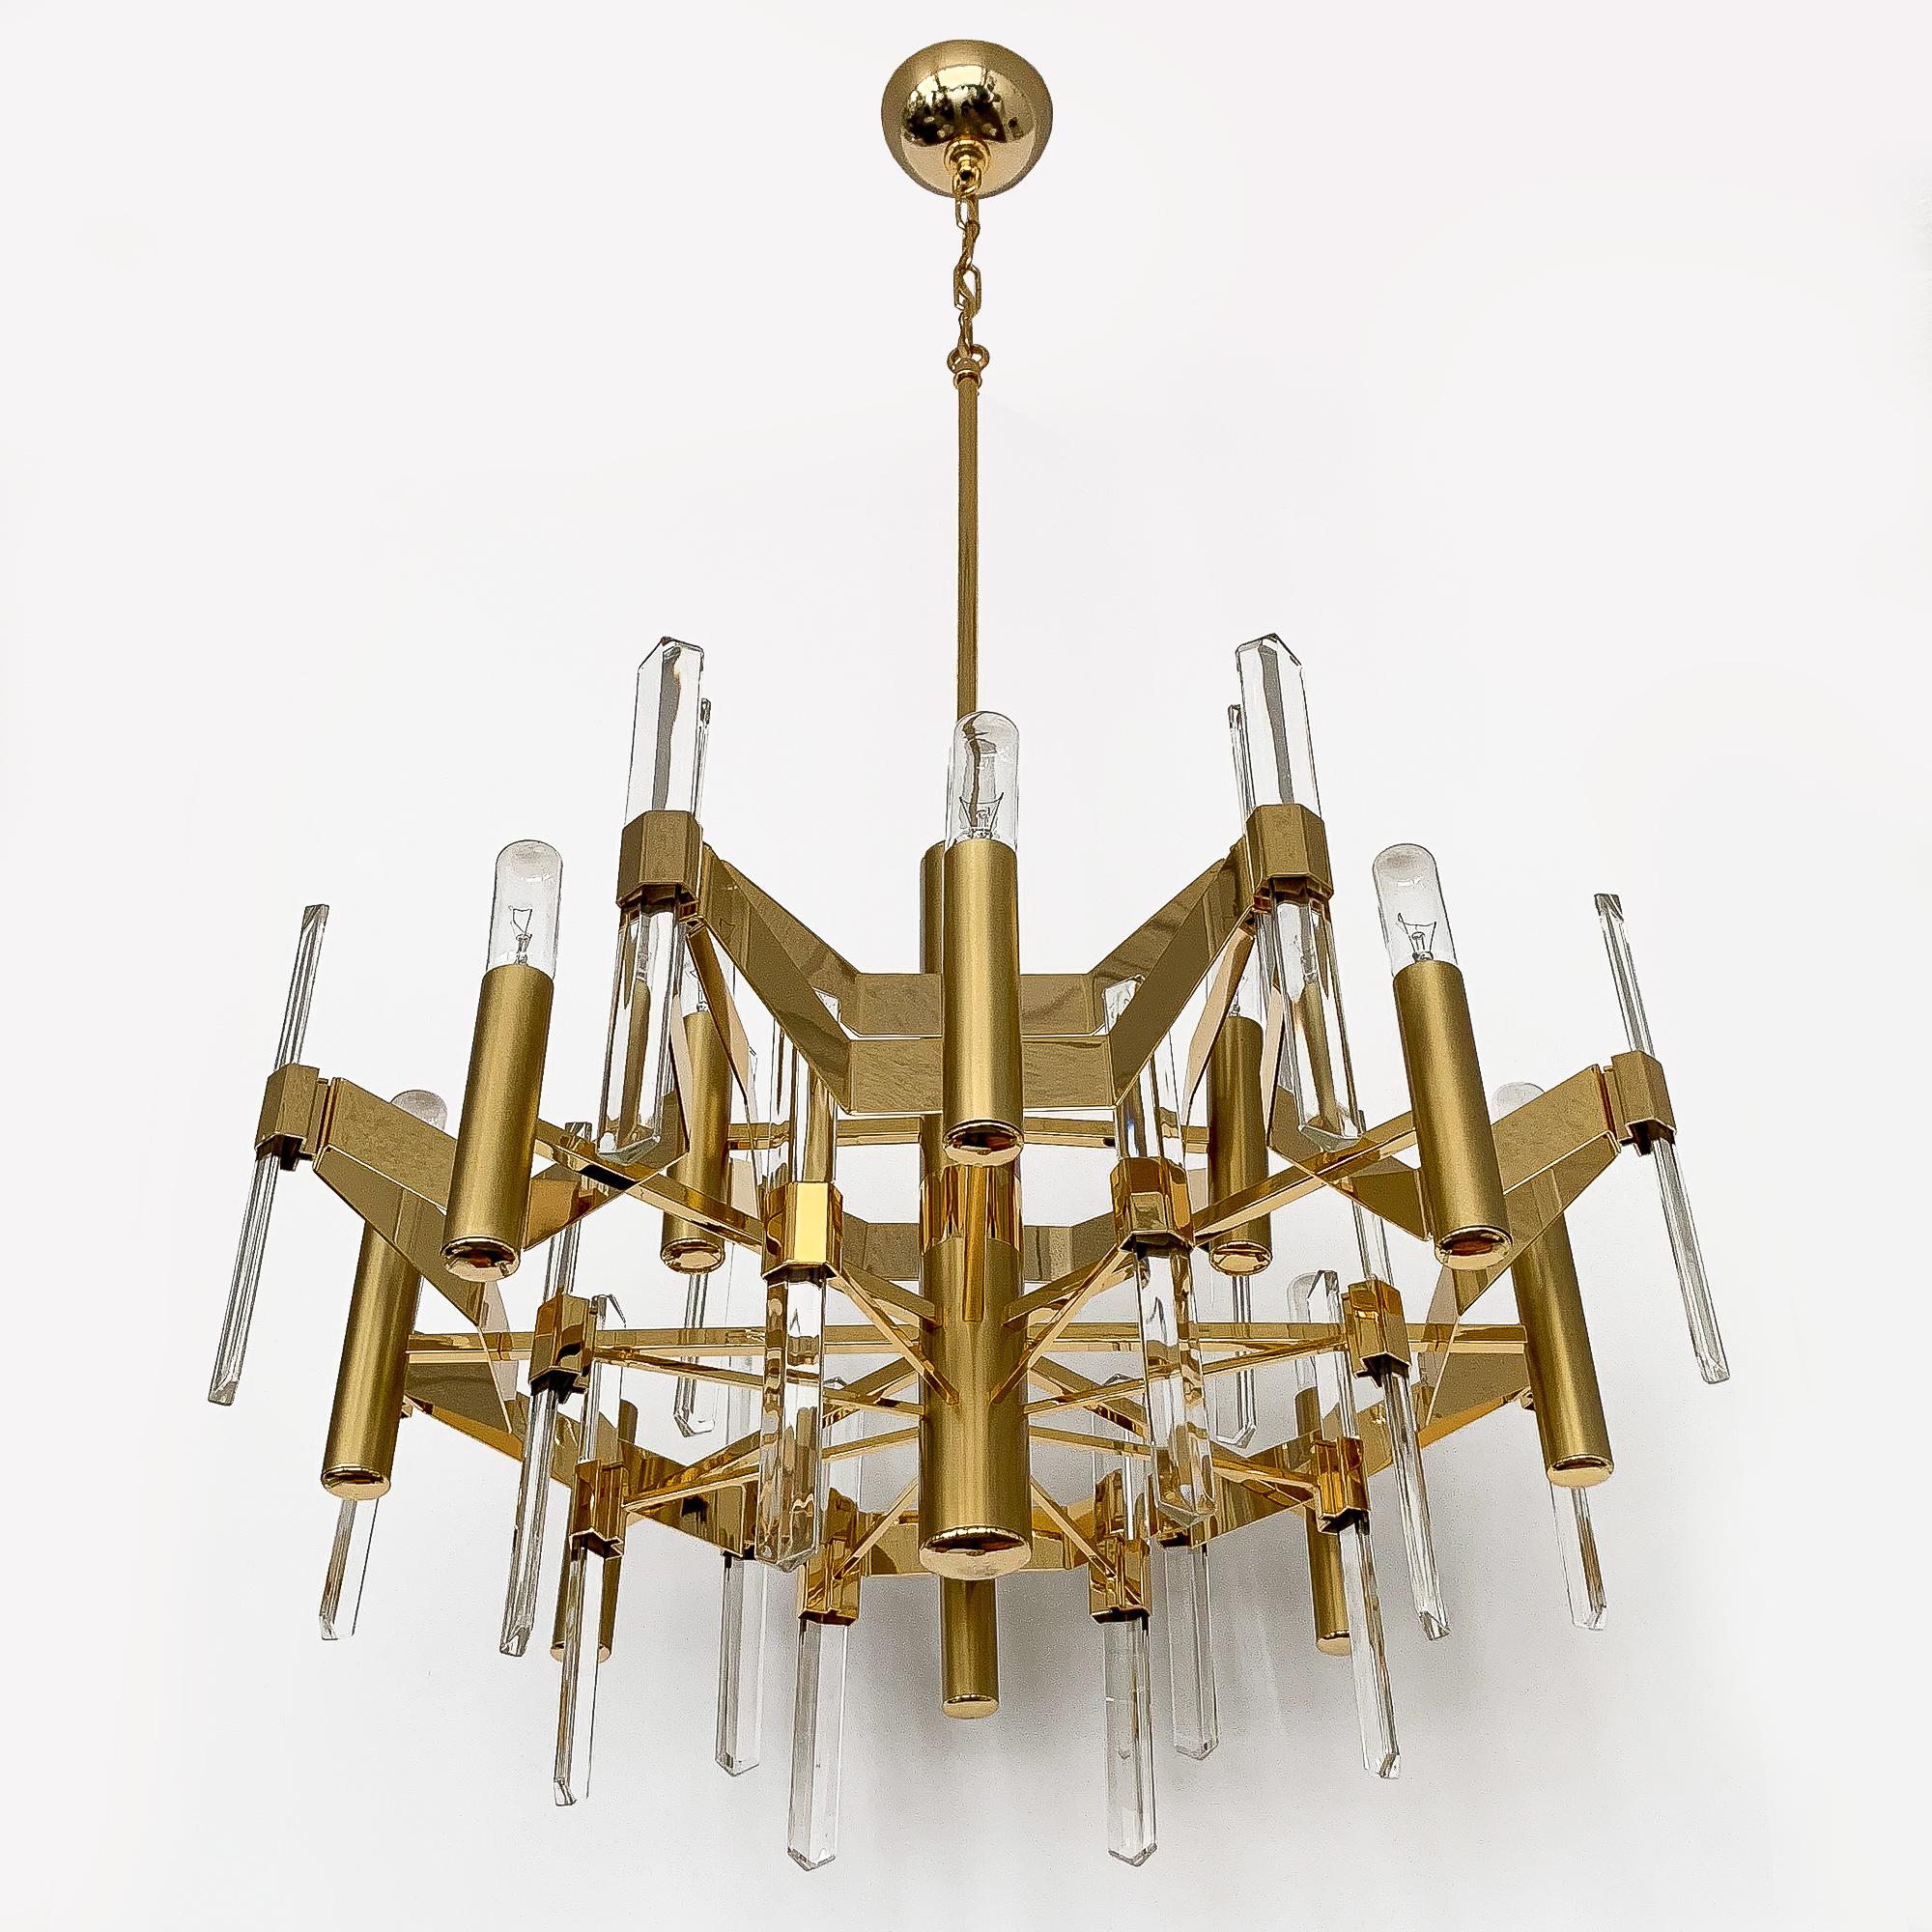 Large gold-plated brass twelve-light chandelier by Gaetano Sciolari. Polished gold plate and brushed brass design. Twenty 9.75